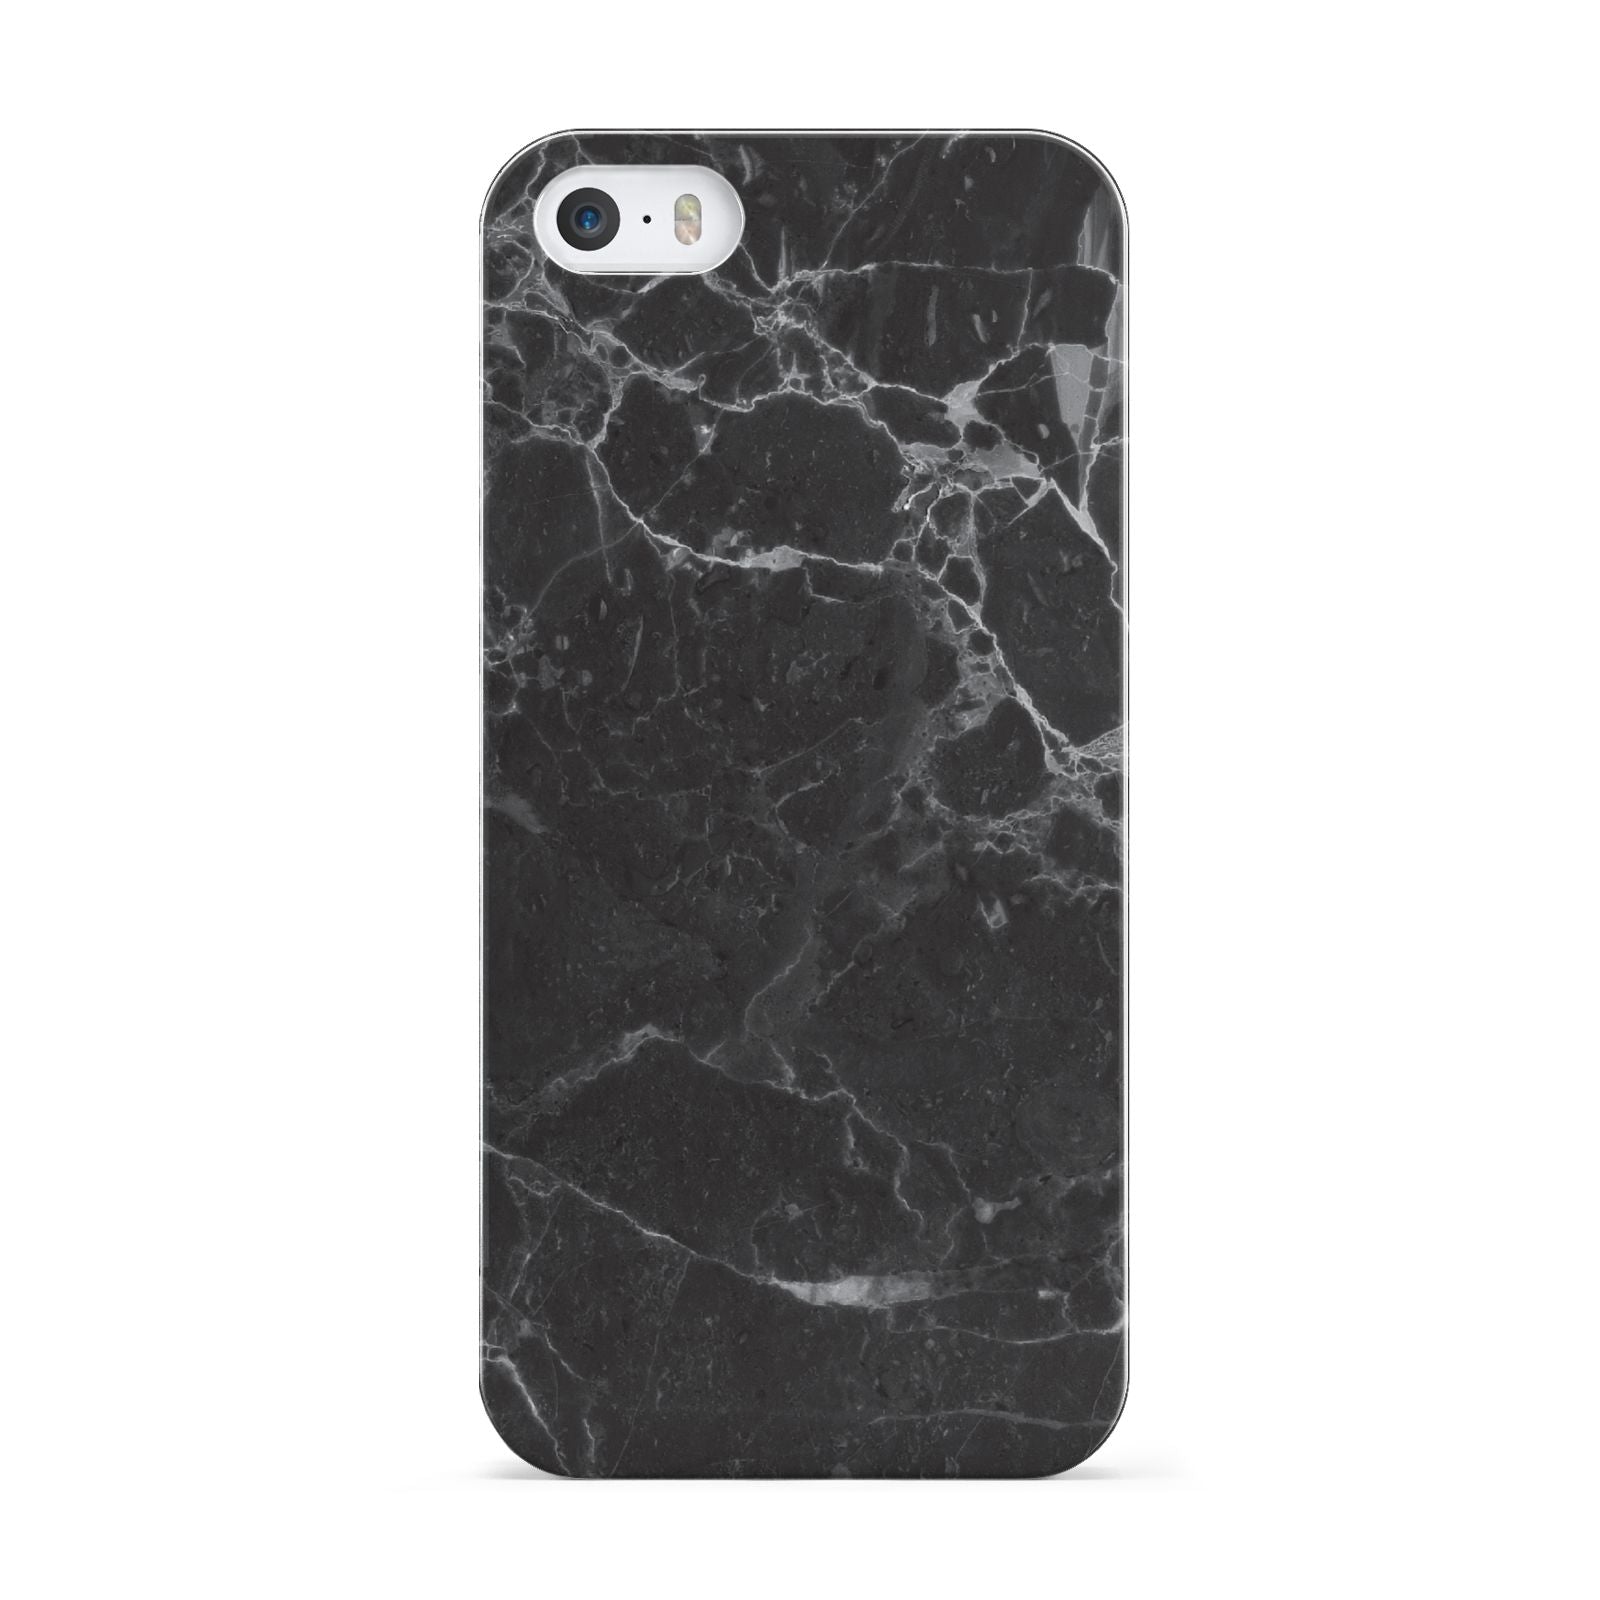 Faux Marble Effect Black Apple iPhone 5 Case